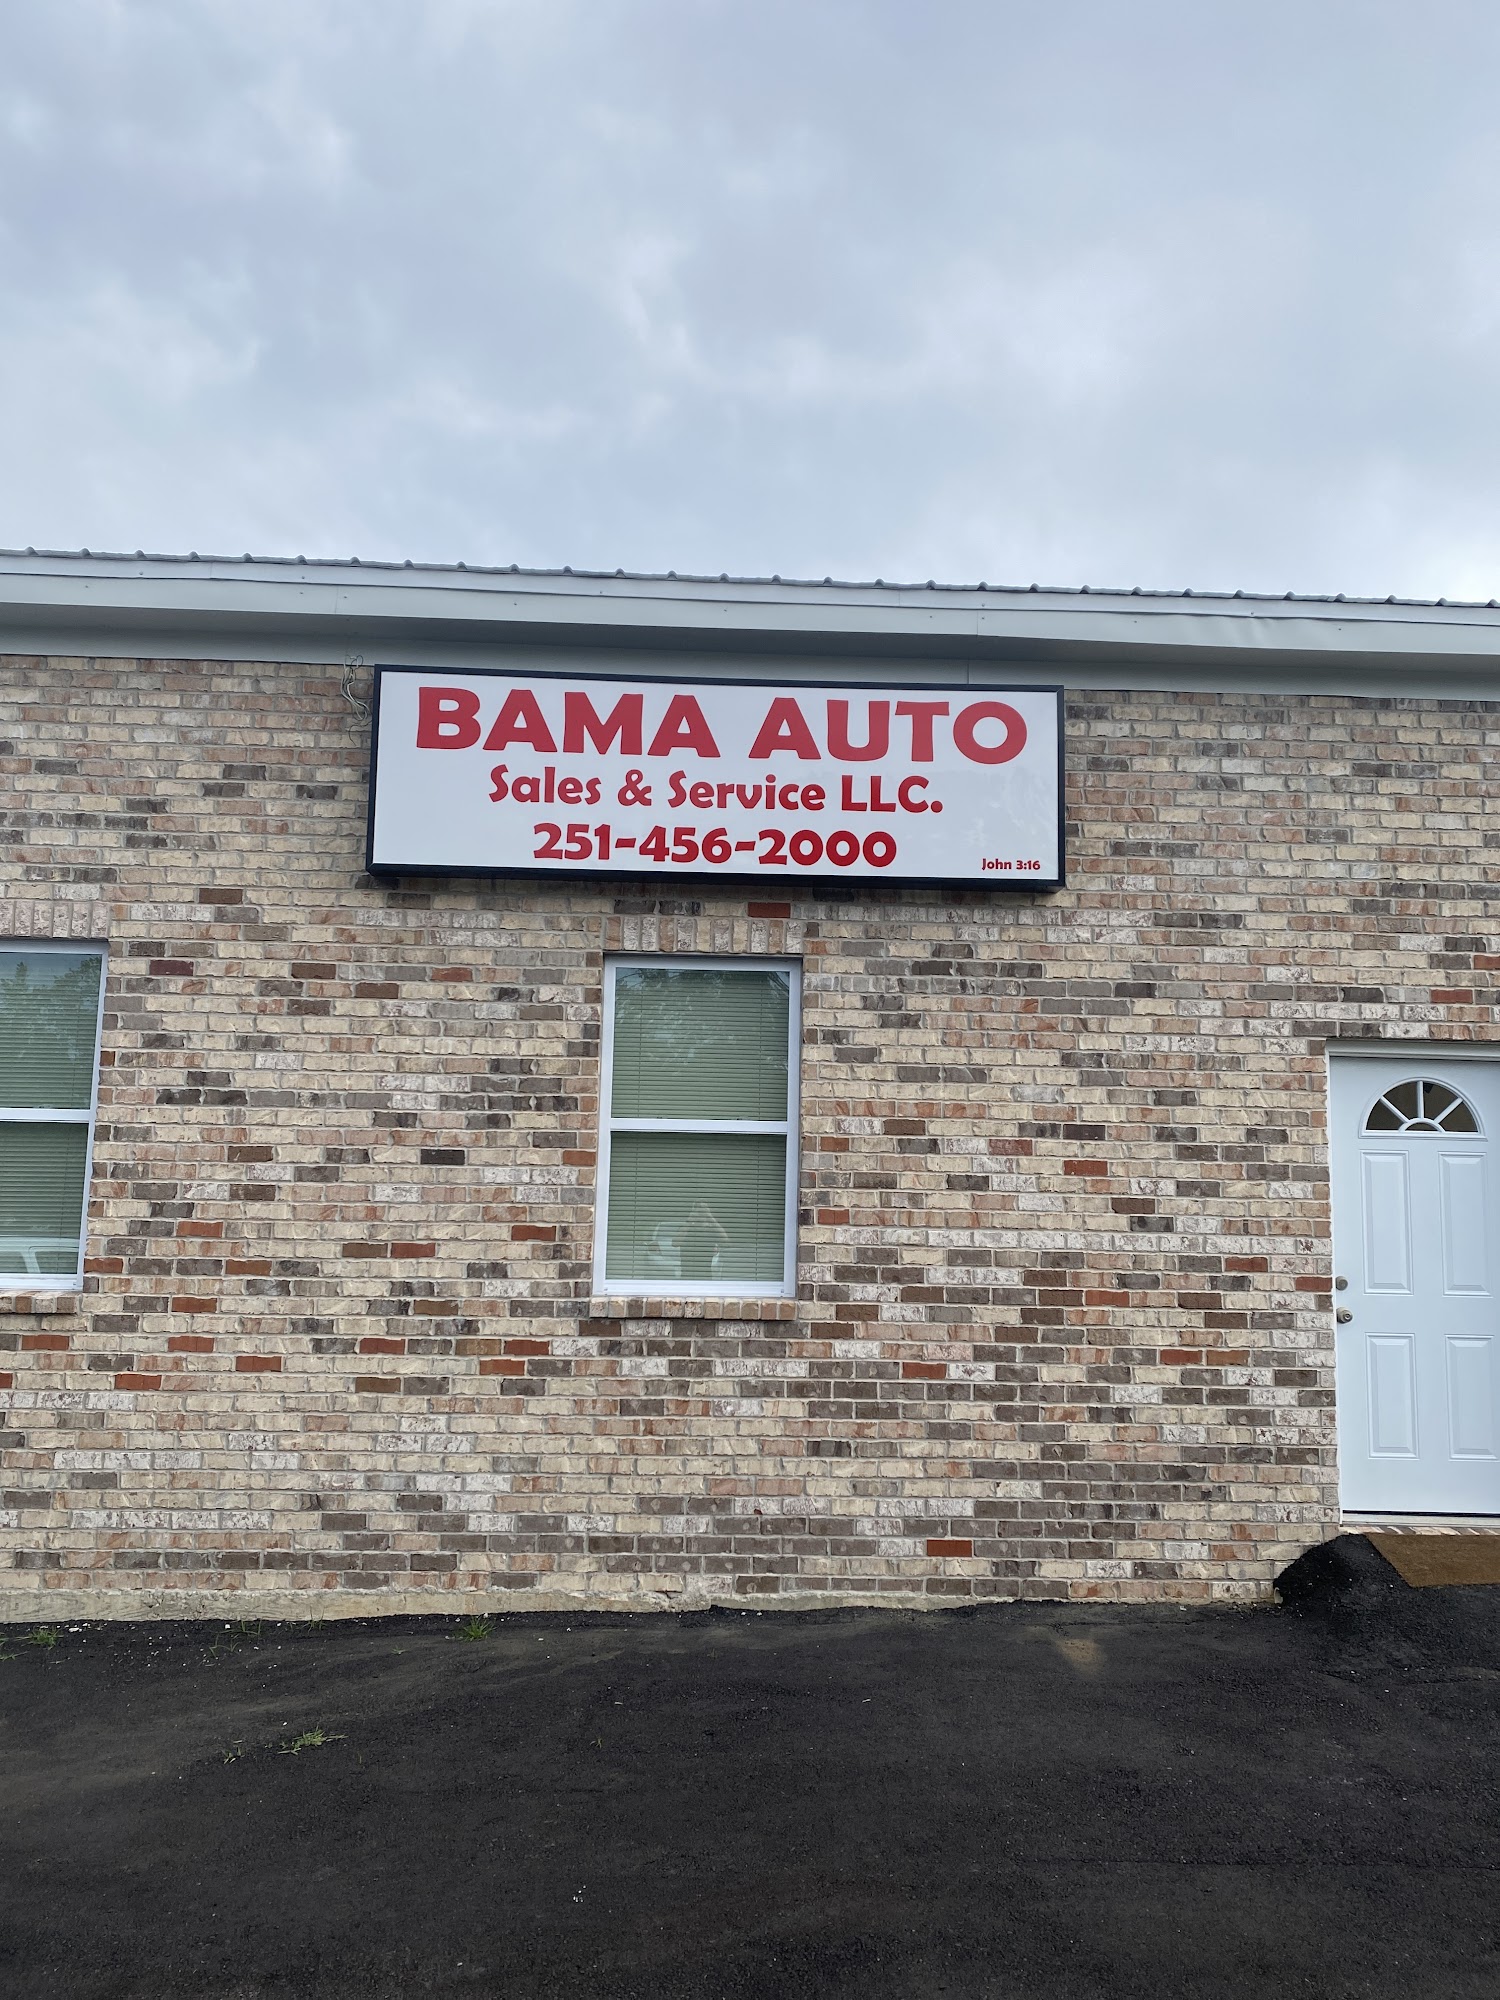 Bama Auto Sales & Service